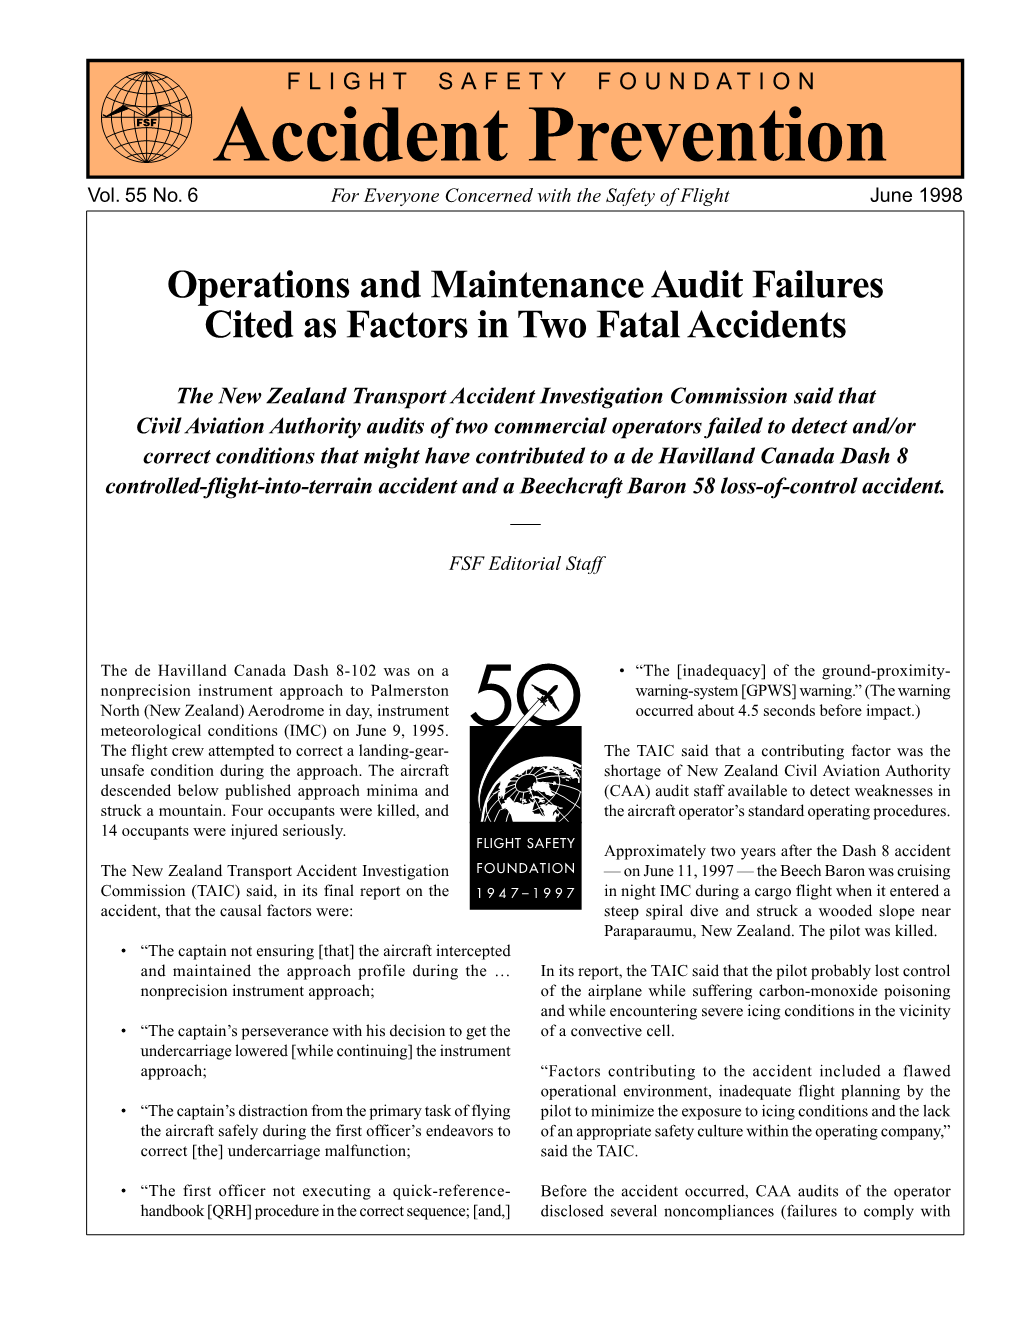 Accident Prevention June 1998